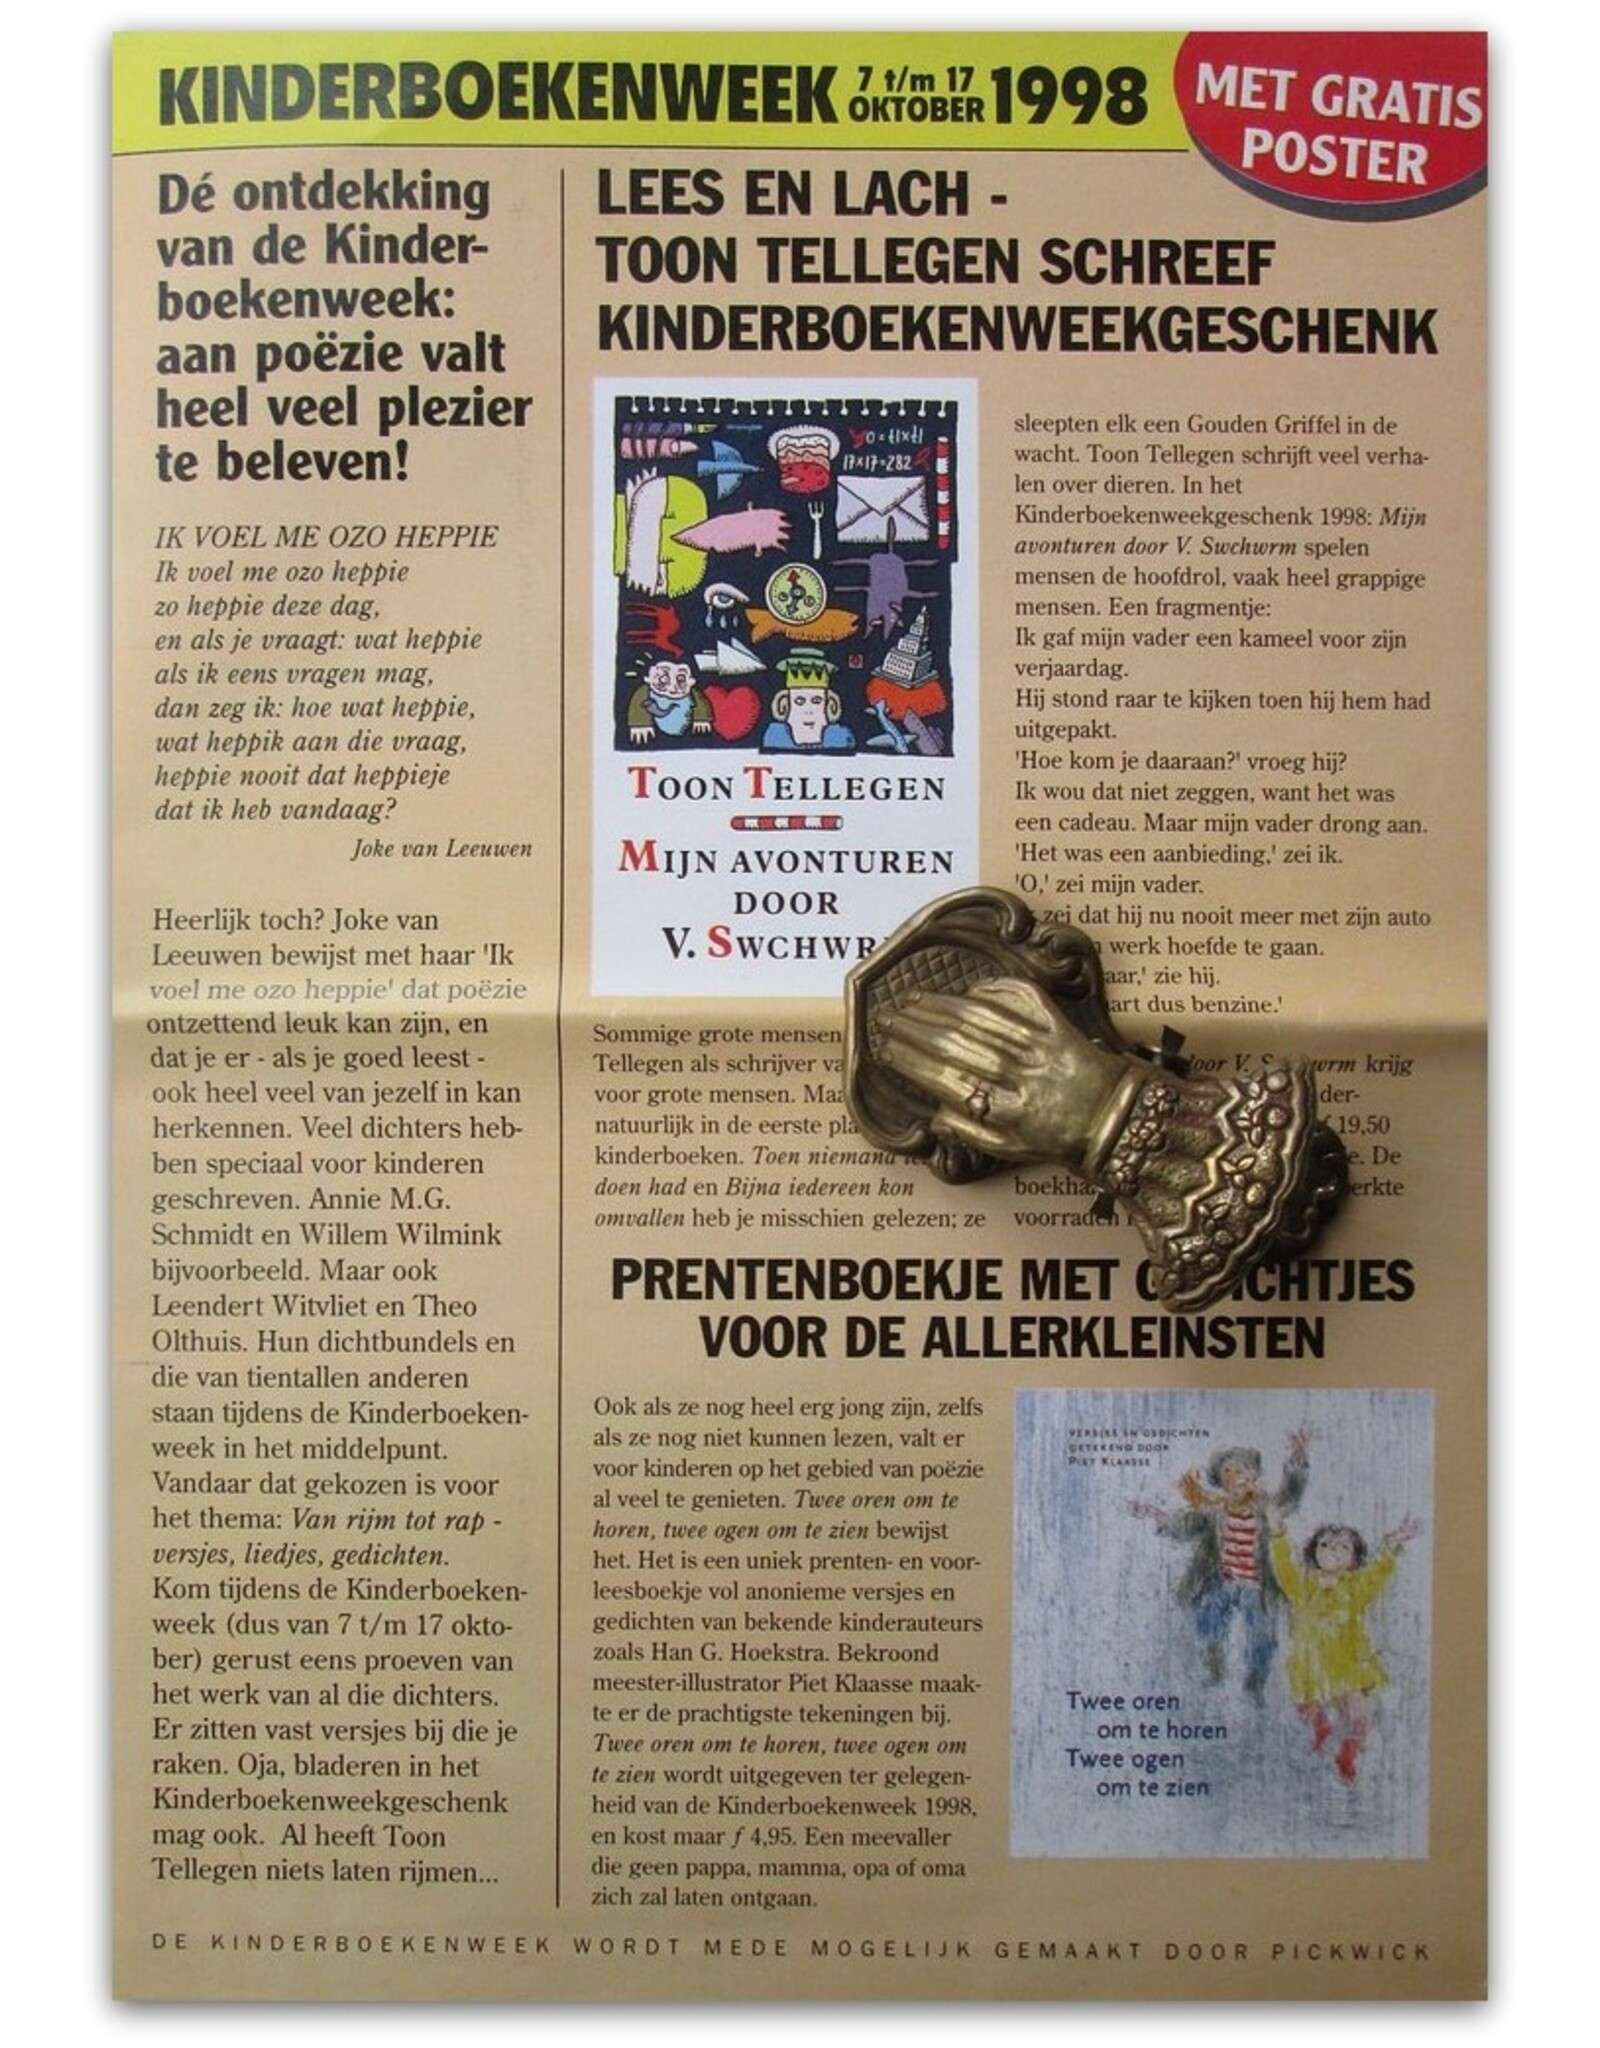 Toon Tellegen - Kinderboekenweek 7 t/m 17 oktober 1998. Met gratis poster